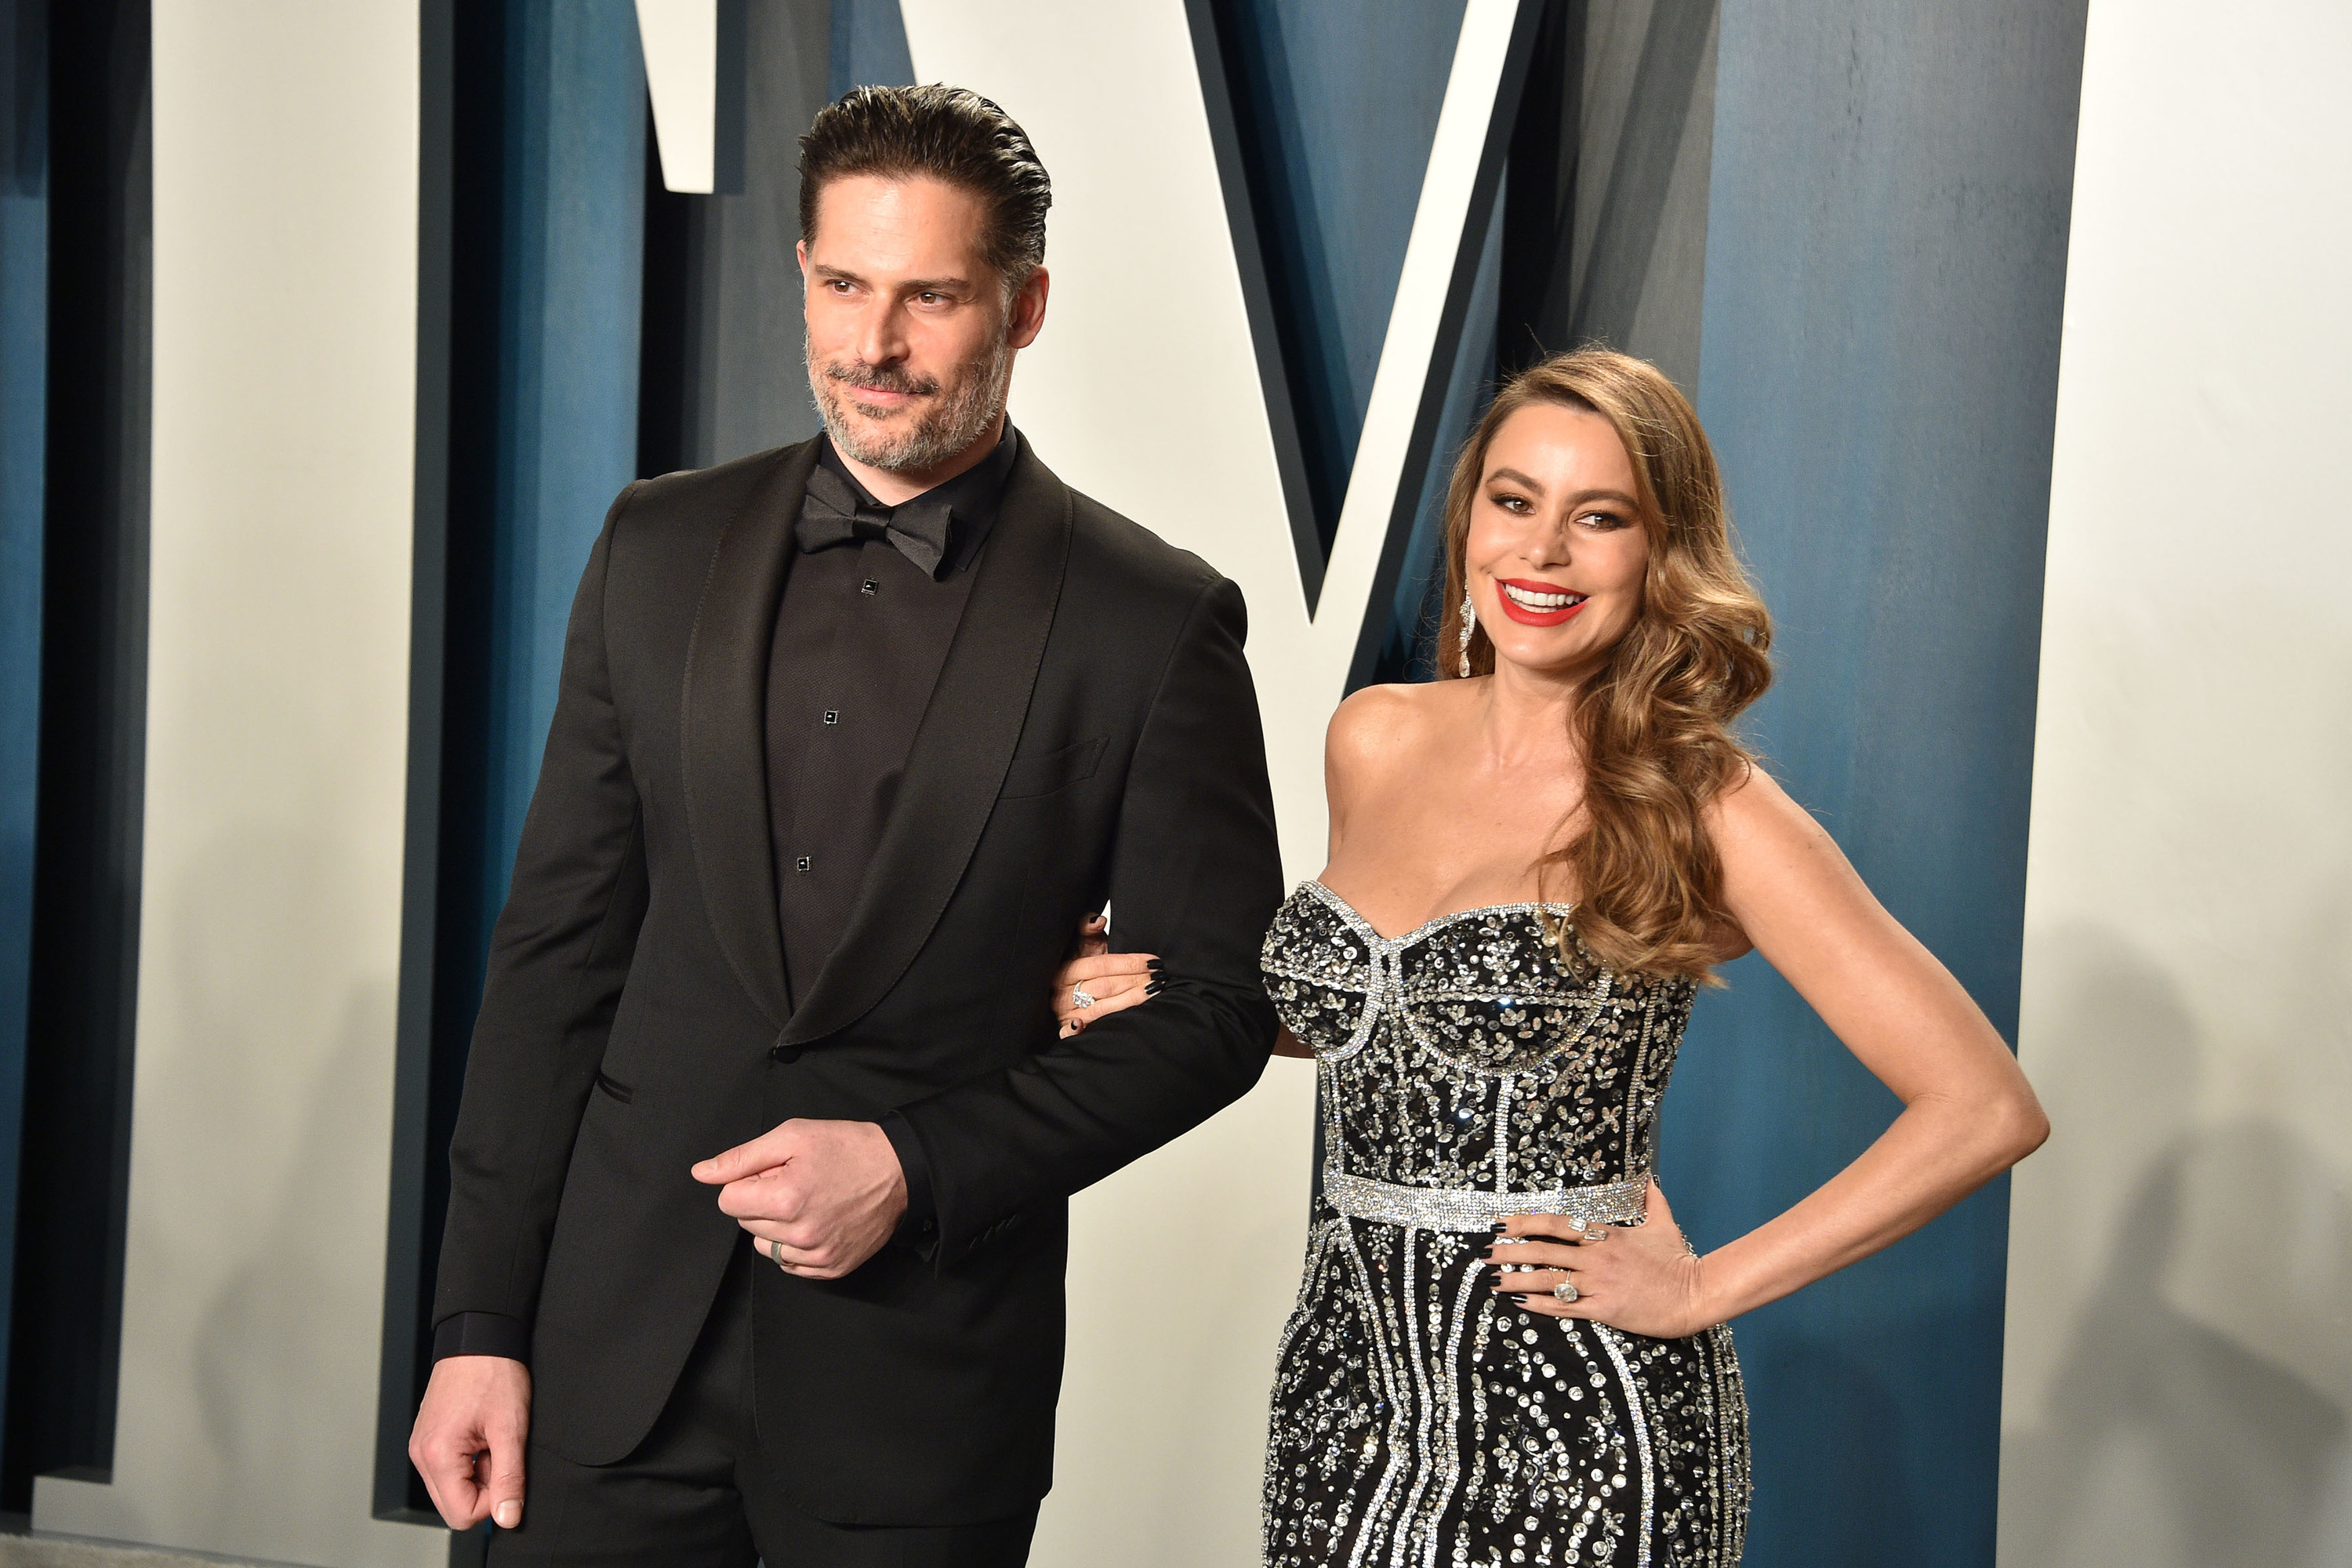 Joe Manganiello and Sofía Vergara at the 2020 Vanity Fair Oscar Party